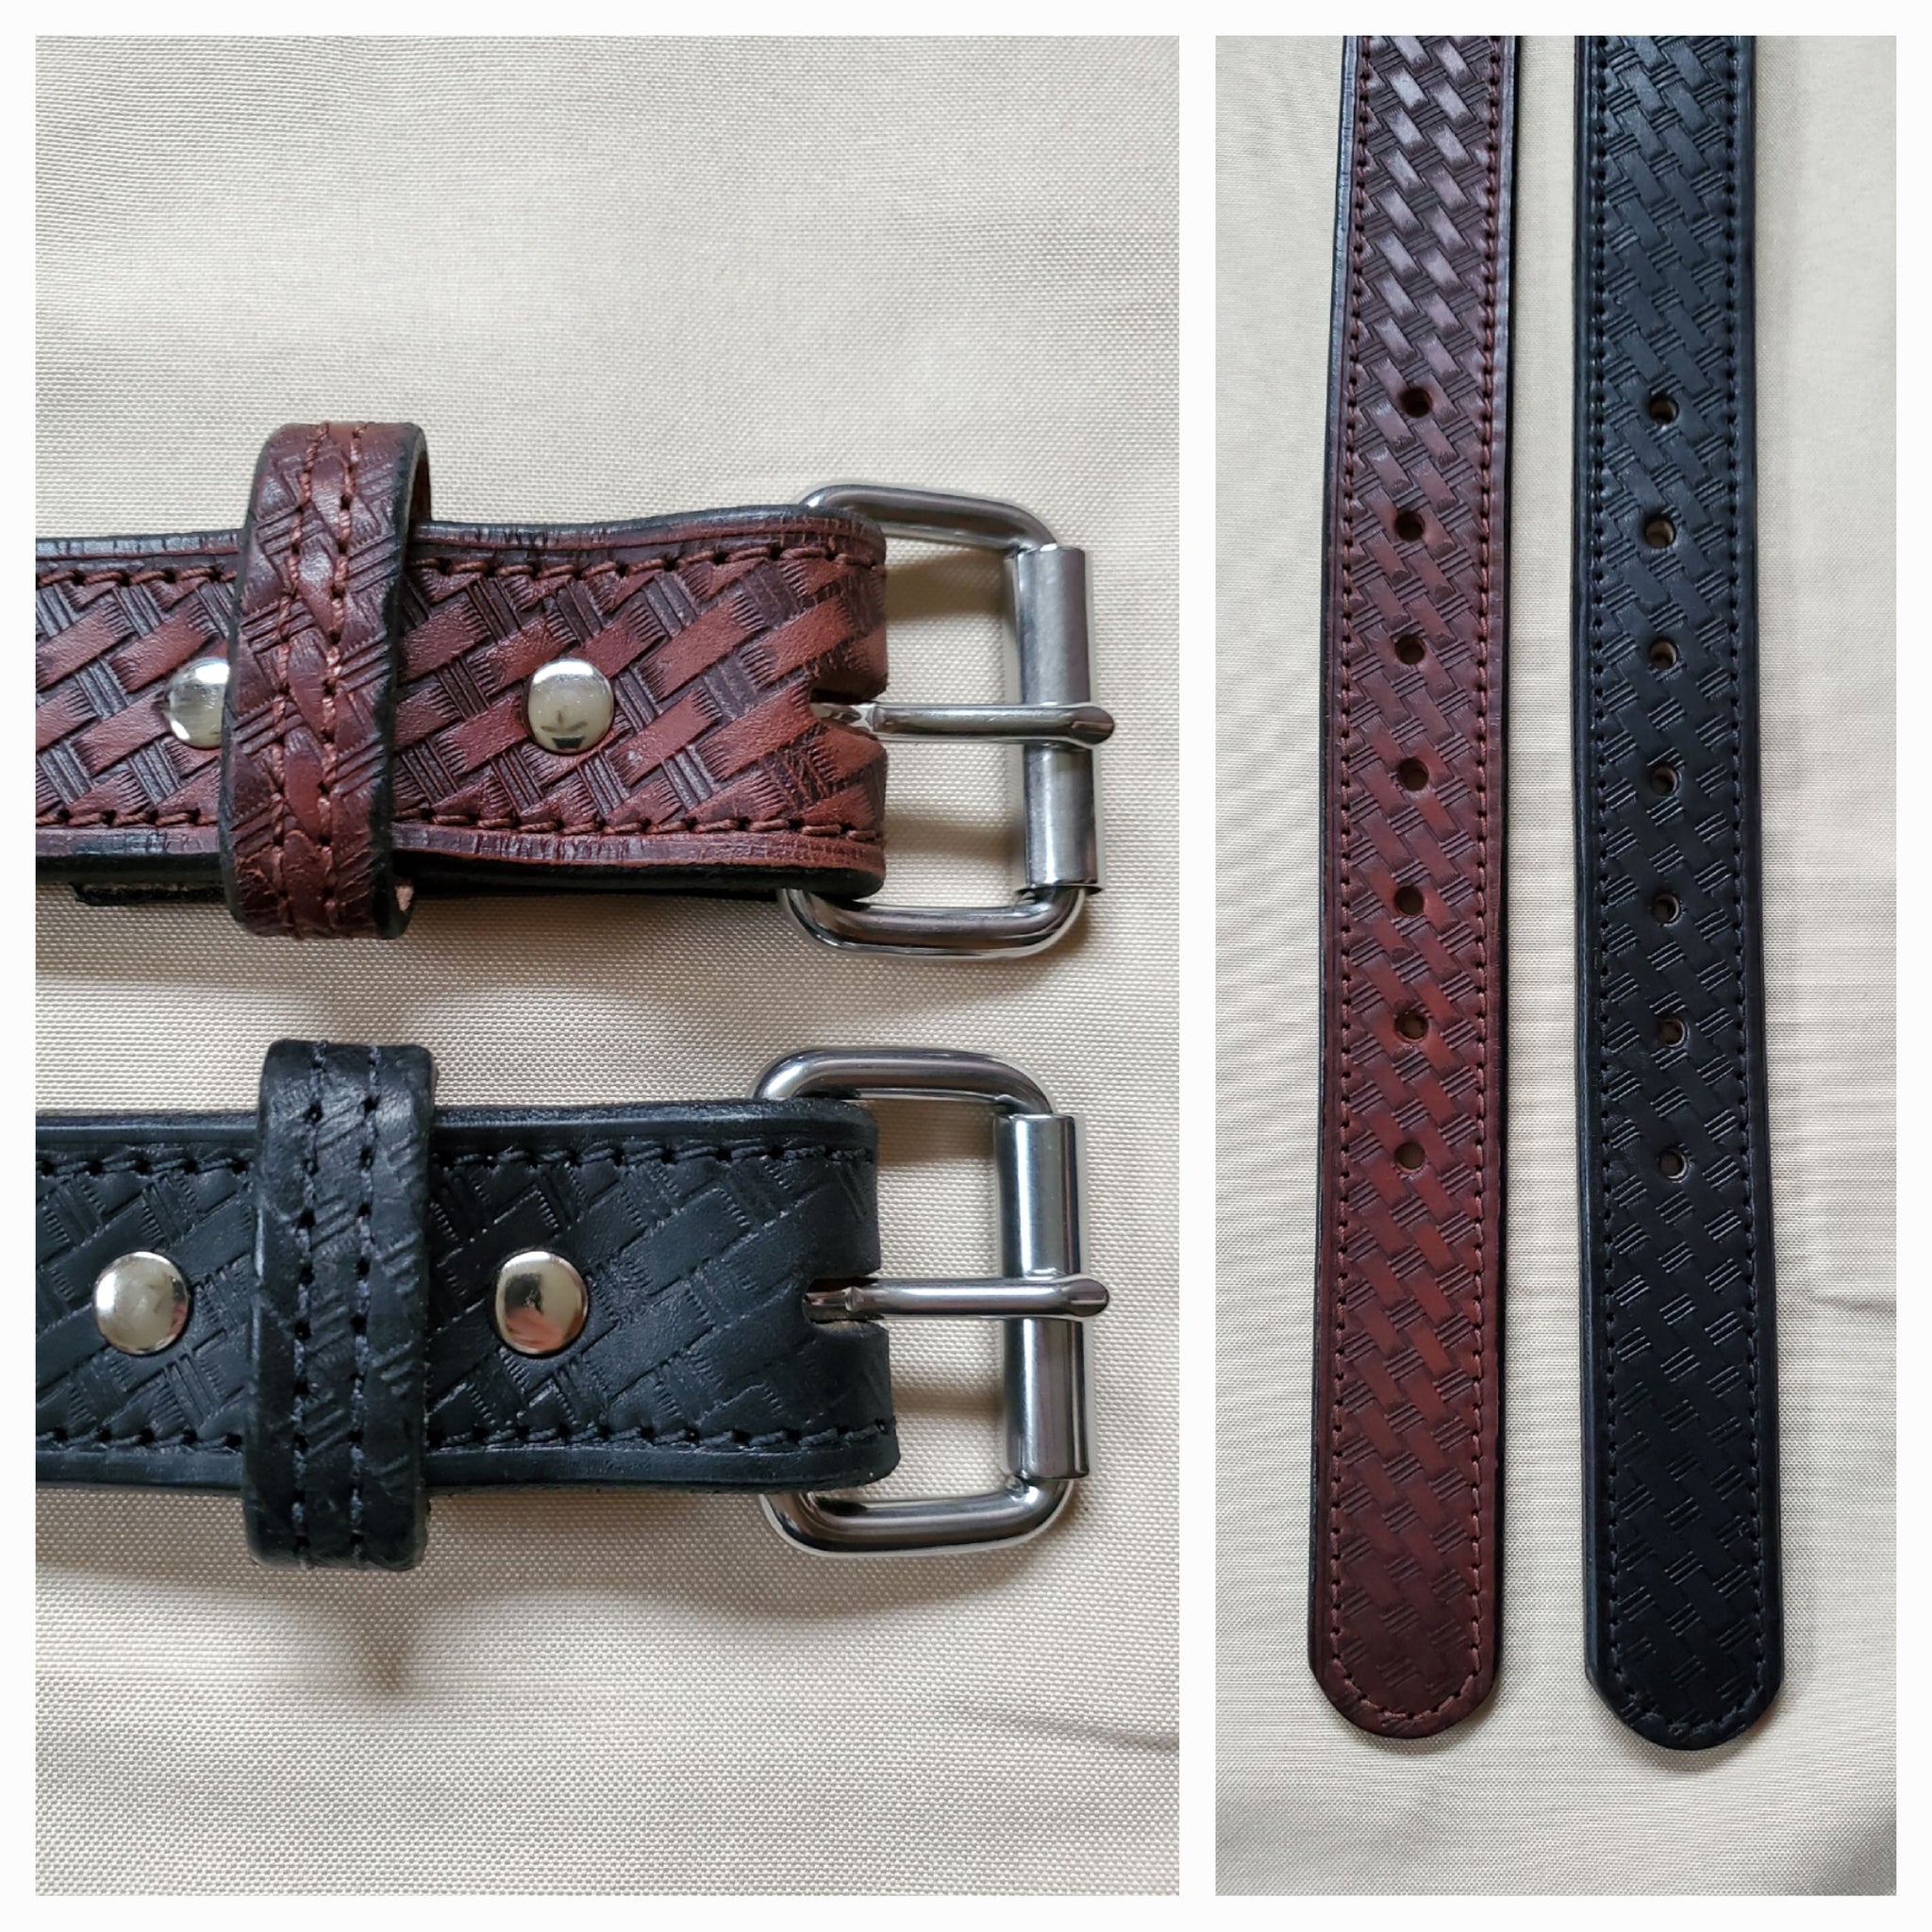 Everyday Men's Belt - Leather - Basketweave w/Stitch - Black/Brown - Size 28-70 - Lifetime Warranty